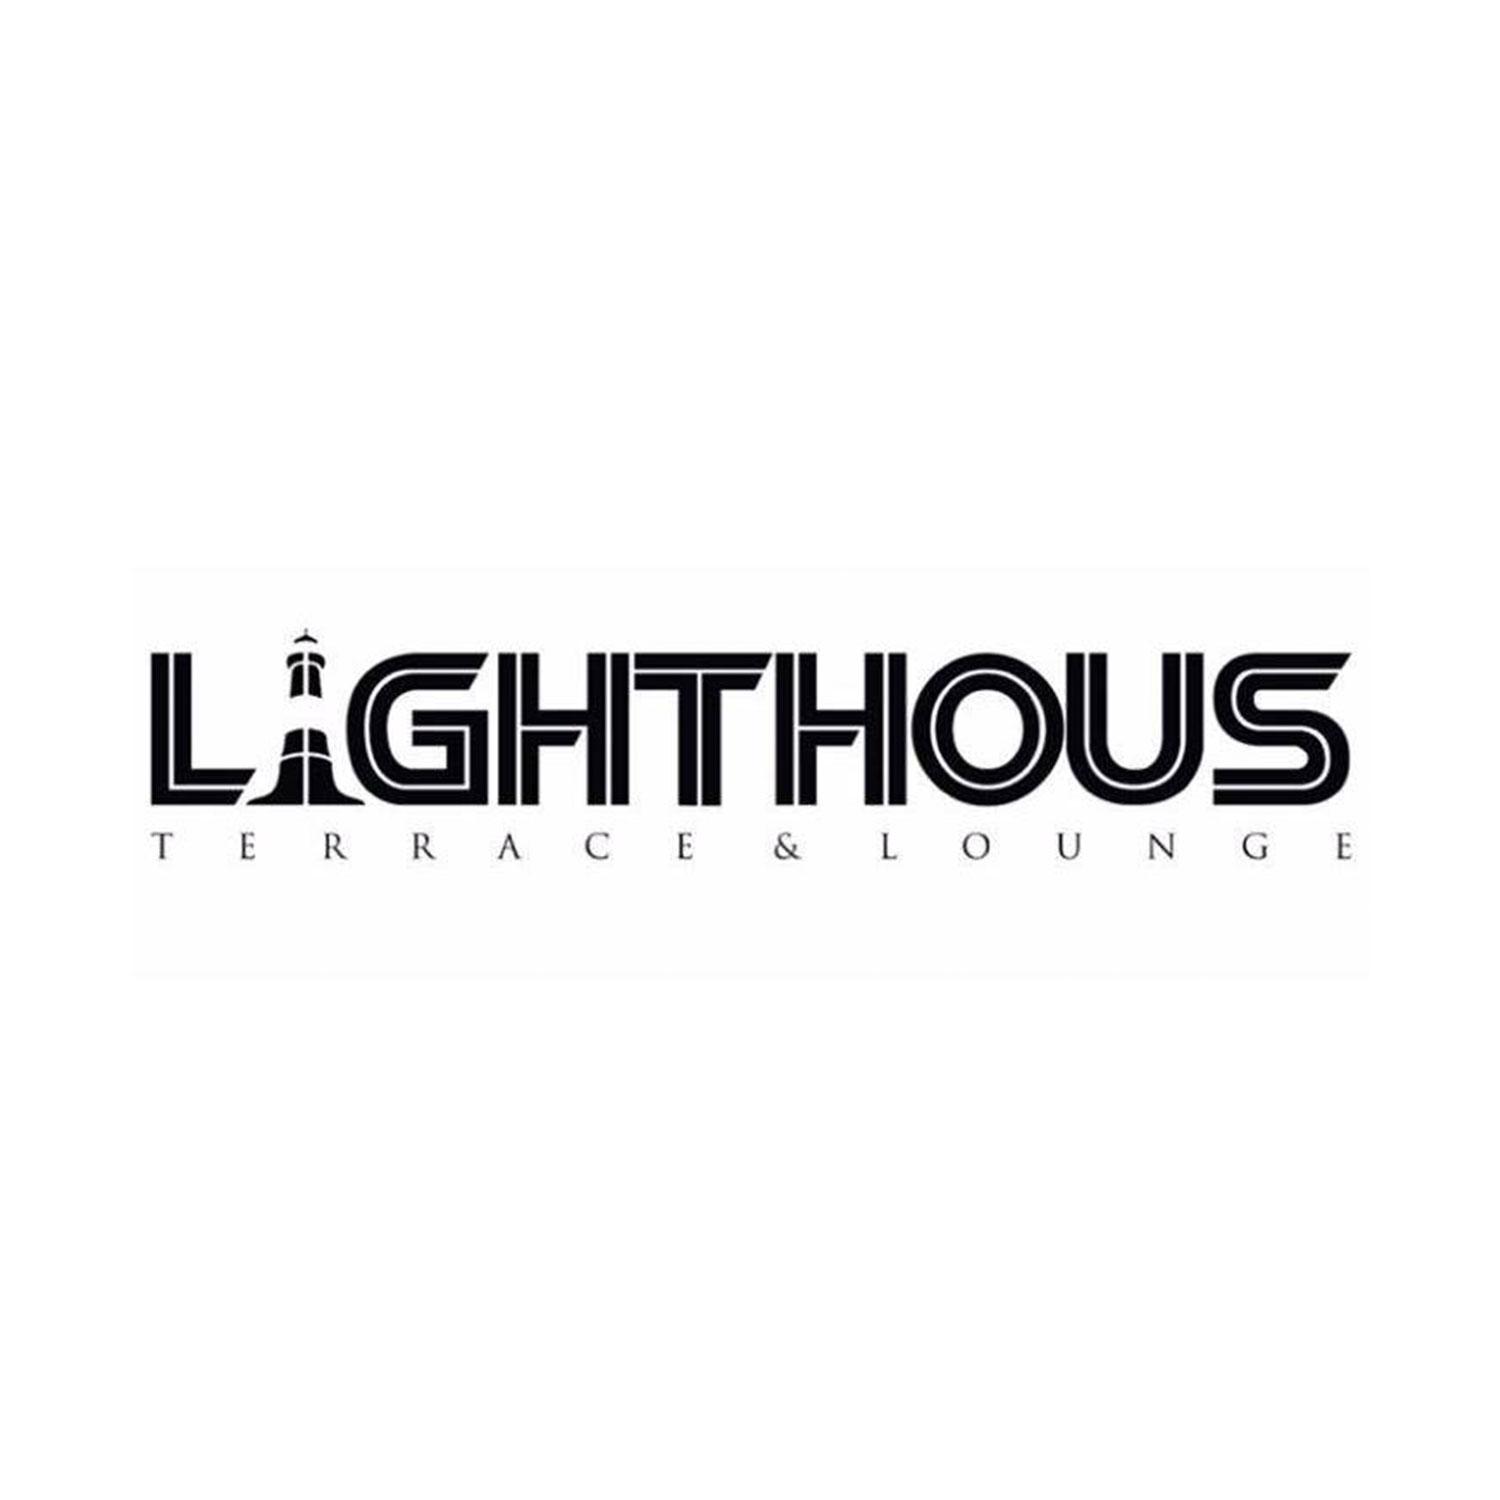 Ladies night at Lighthous Terrace